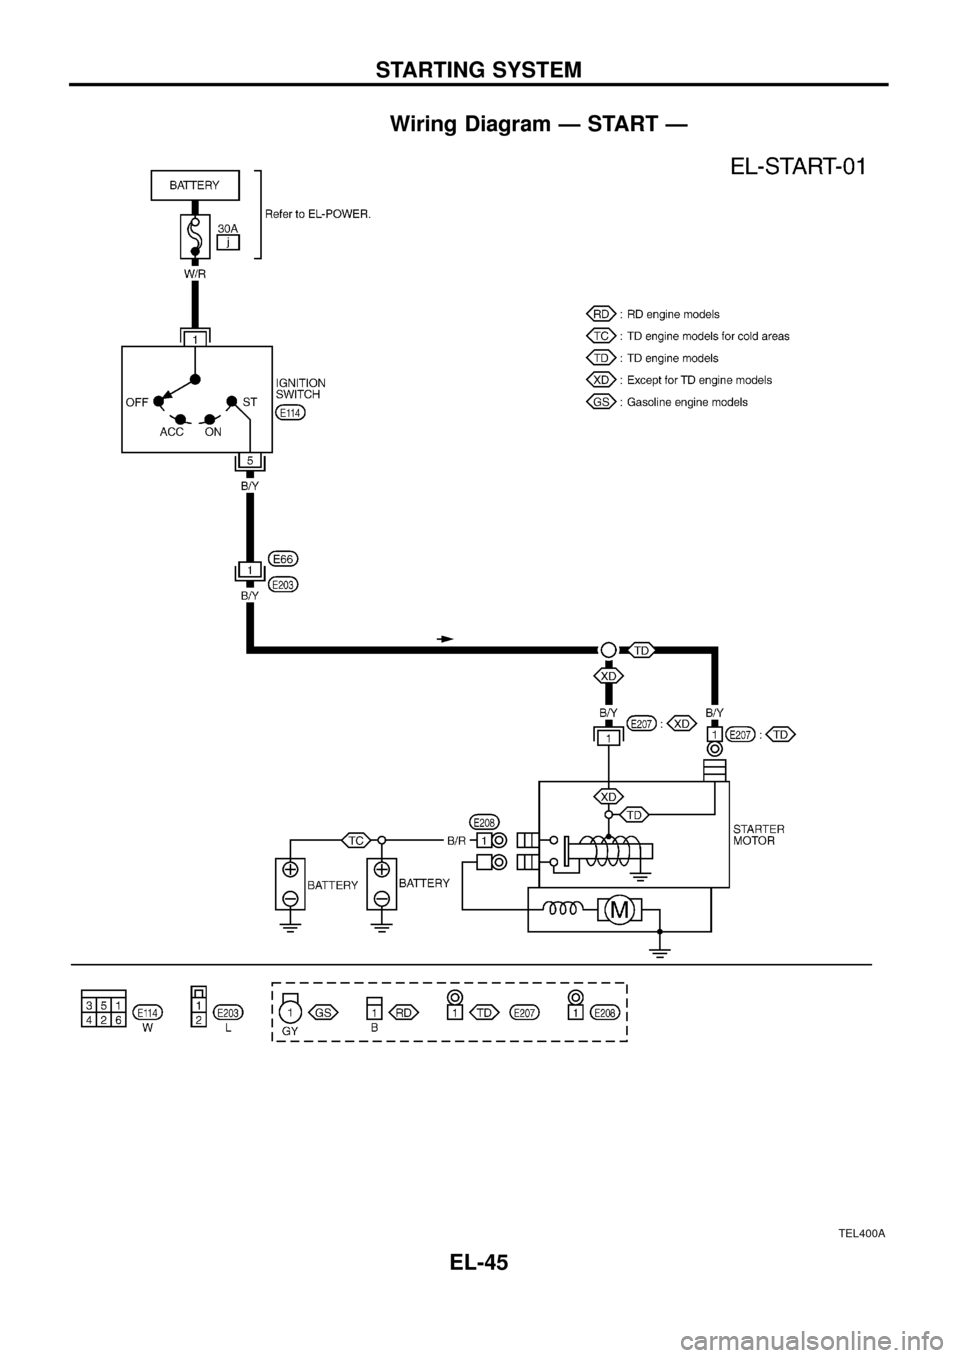 NISSAN PATROL 1998 Y61 / 5.G Electrical System Workshop Manual Wiring Diagram Ð START Ð
TEL400A
STARTING SYSTEM
EL-45 